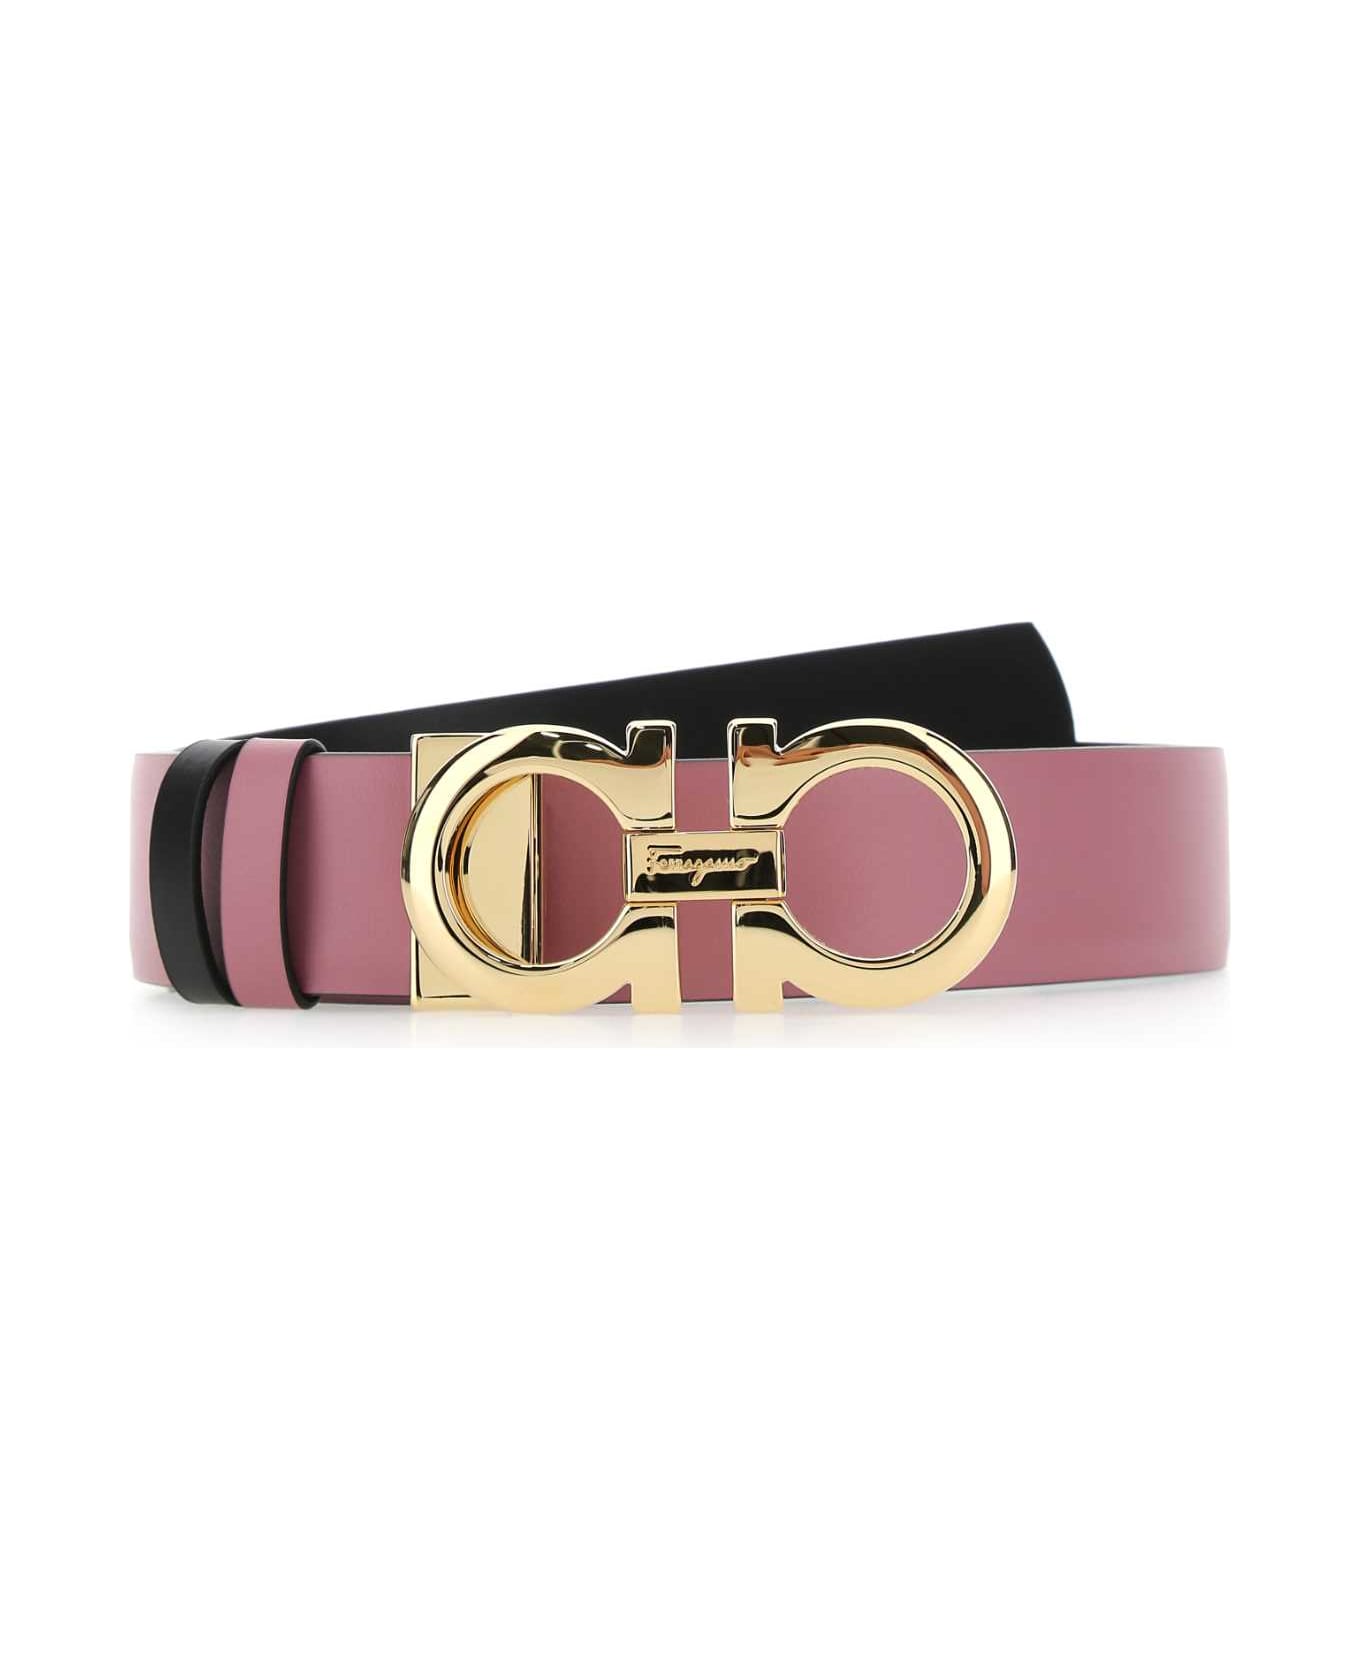 Ferragamo Pink Leather Reversible Belt - PINK